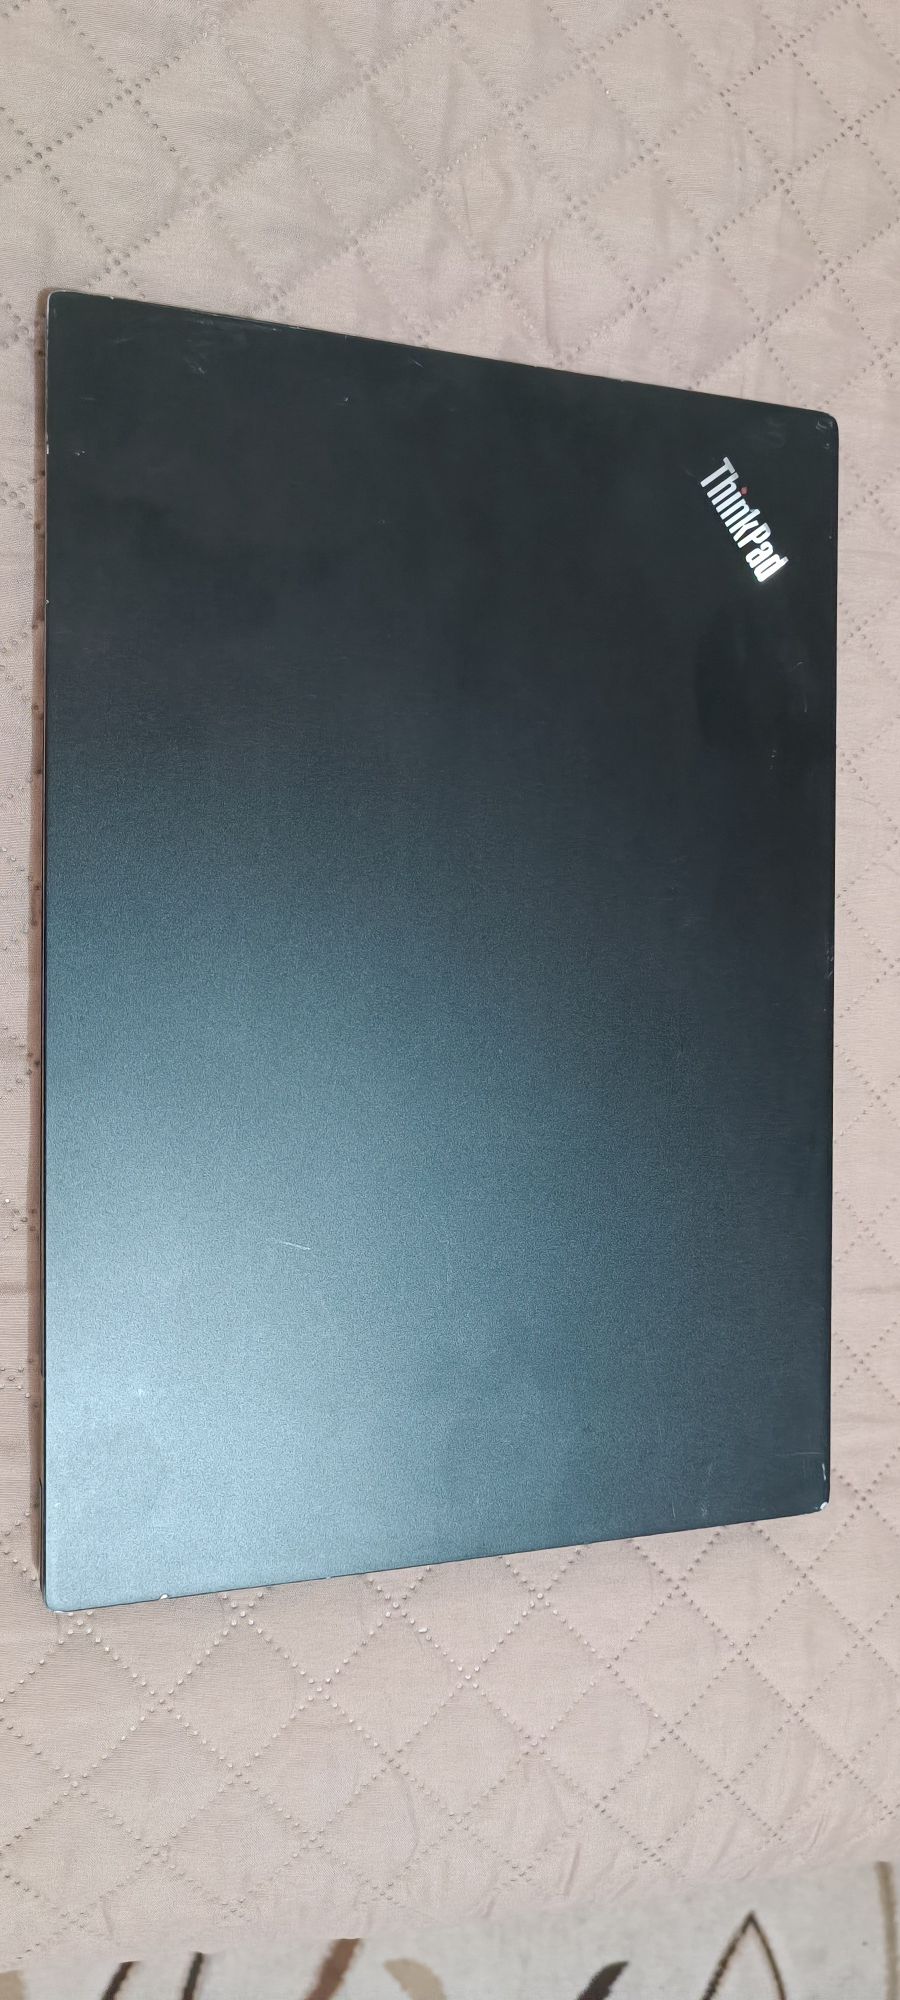 Lenovo Thinkpad L380/ i3 gen8 / 8 gb ram/ ssd 128